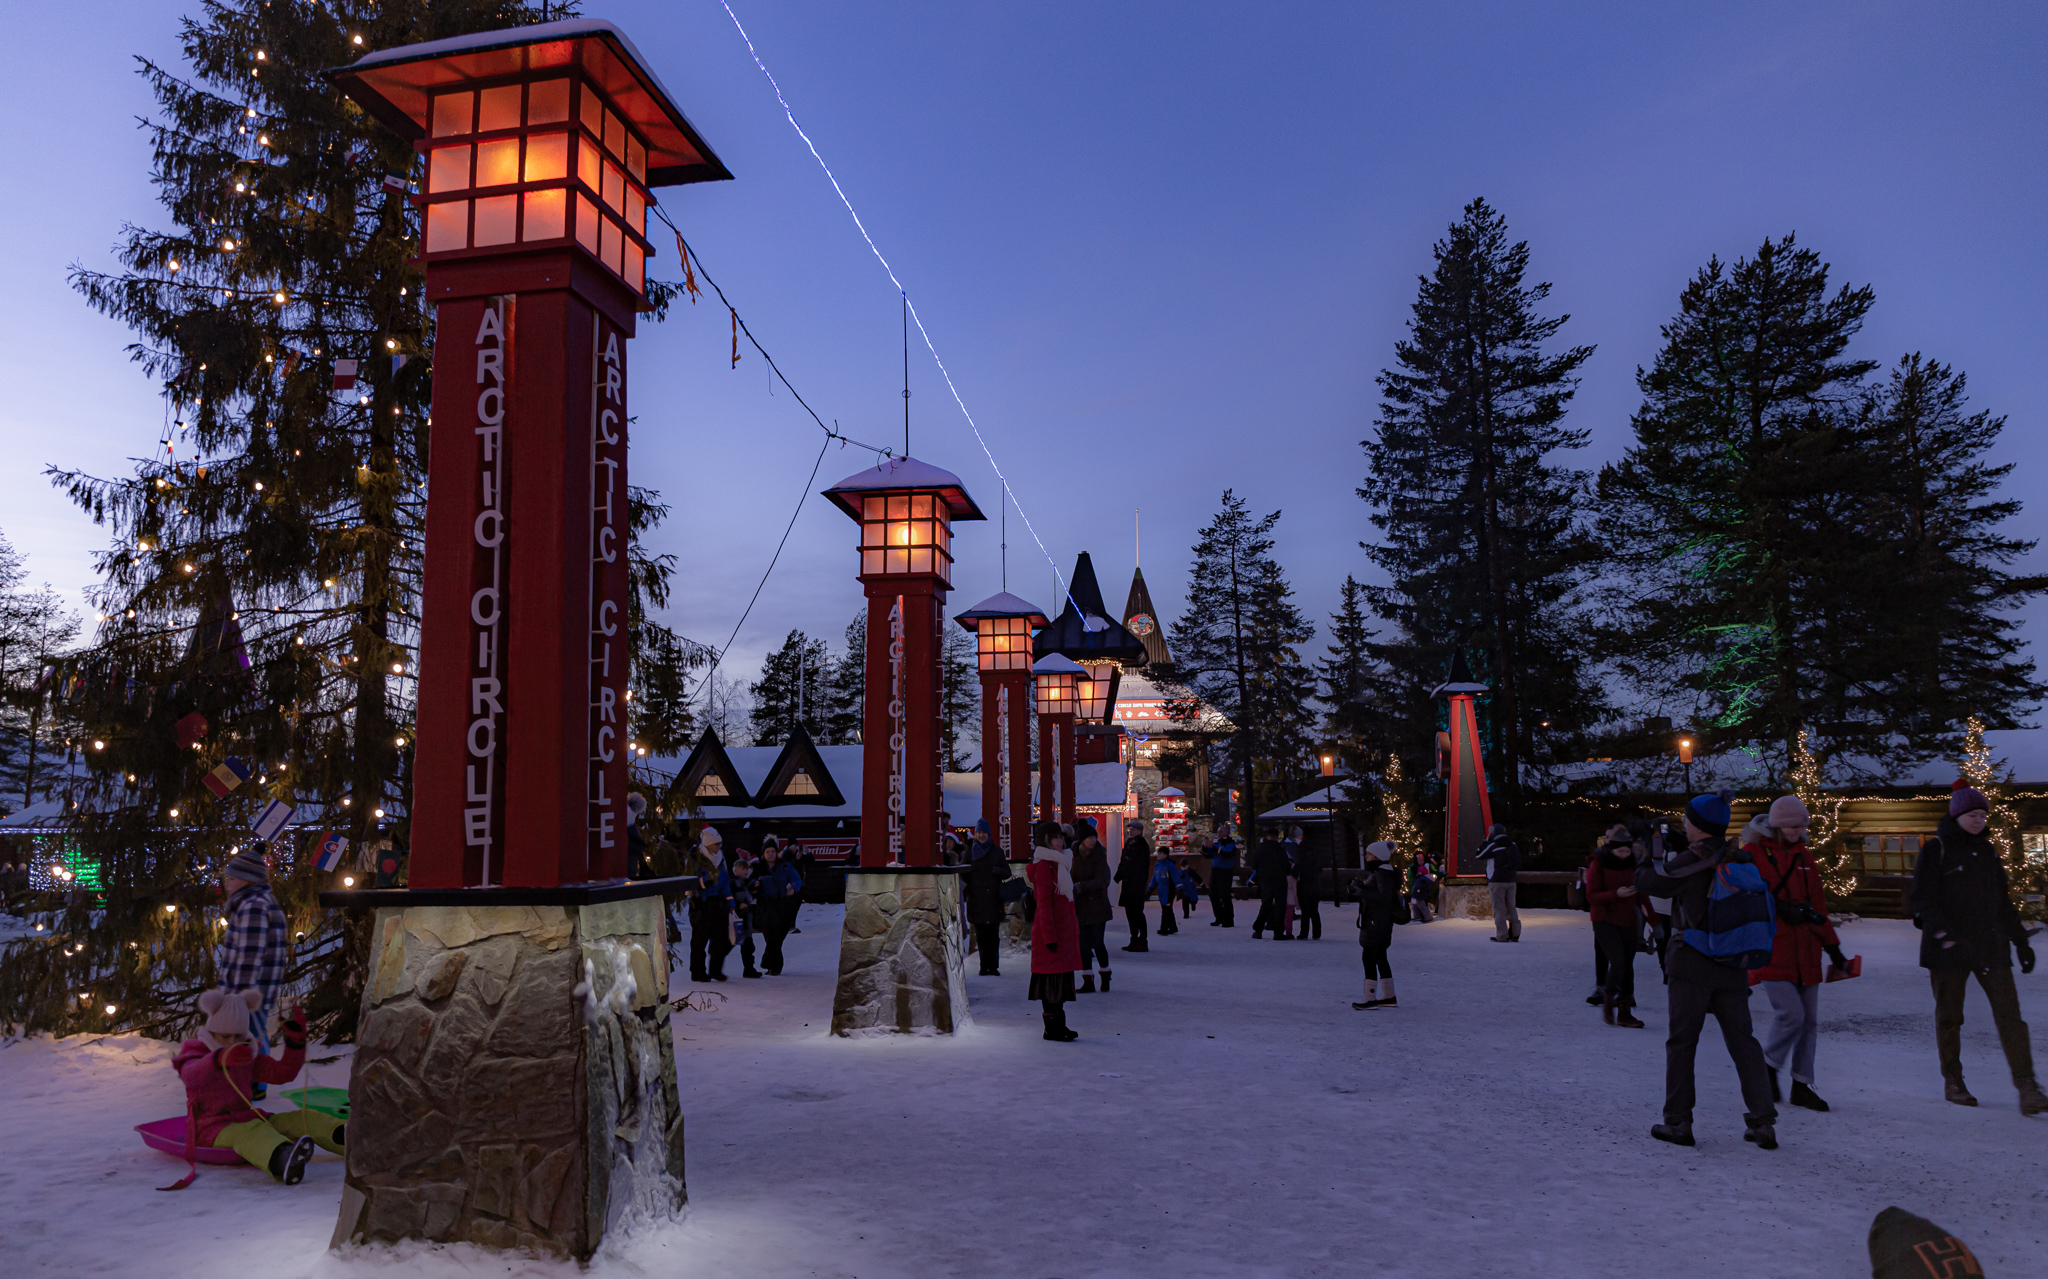 Christmas mood in Santa Clais Village Rovaniemi Finland - Visit Lapland Pic- Jasim Sarker